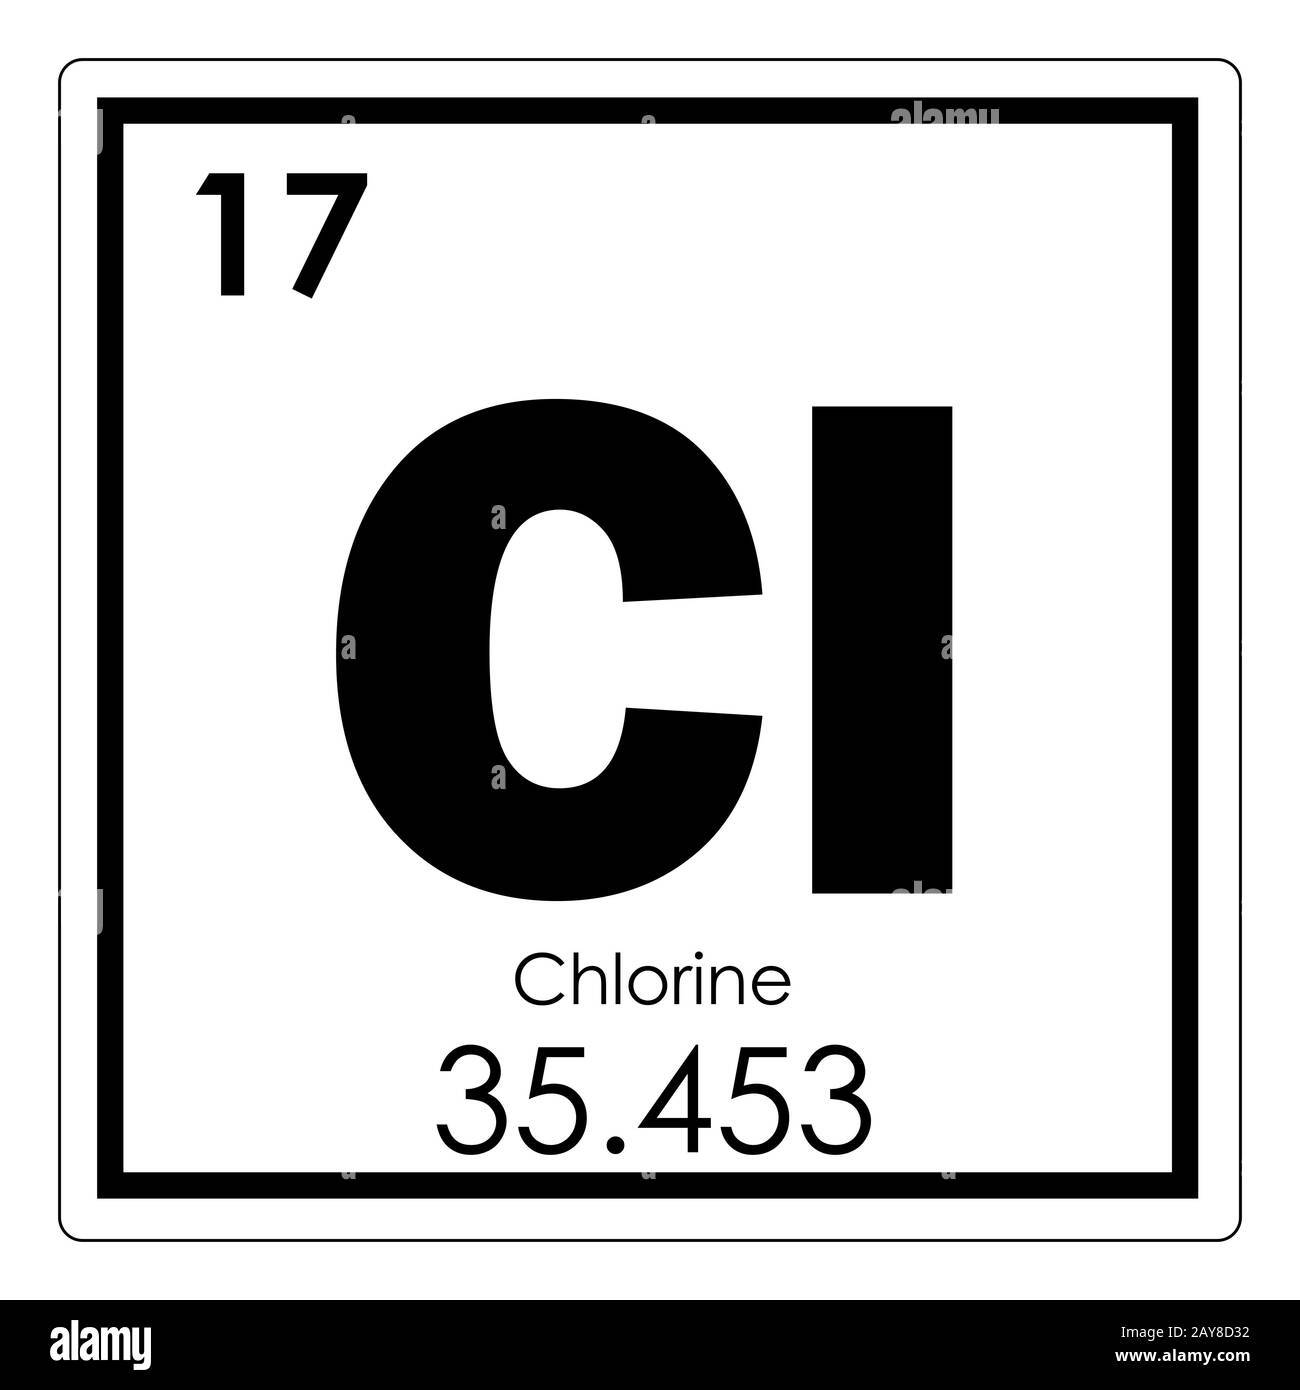 Chlorine chemical element Stock Photo